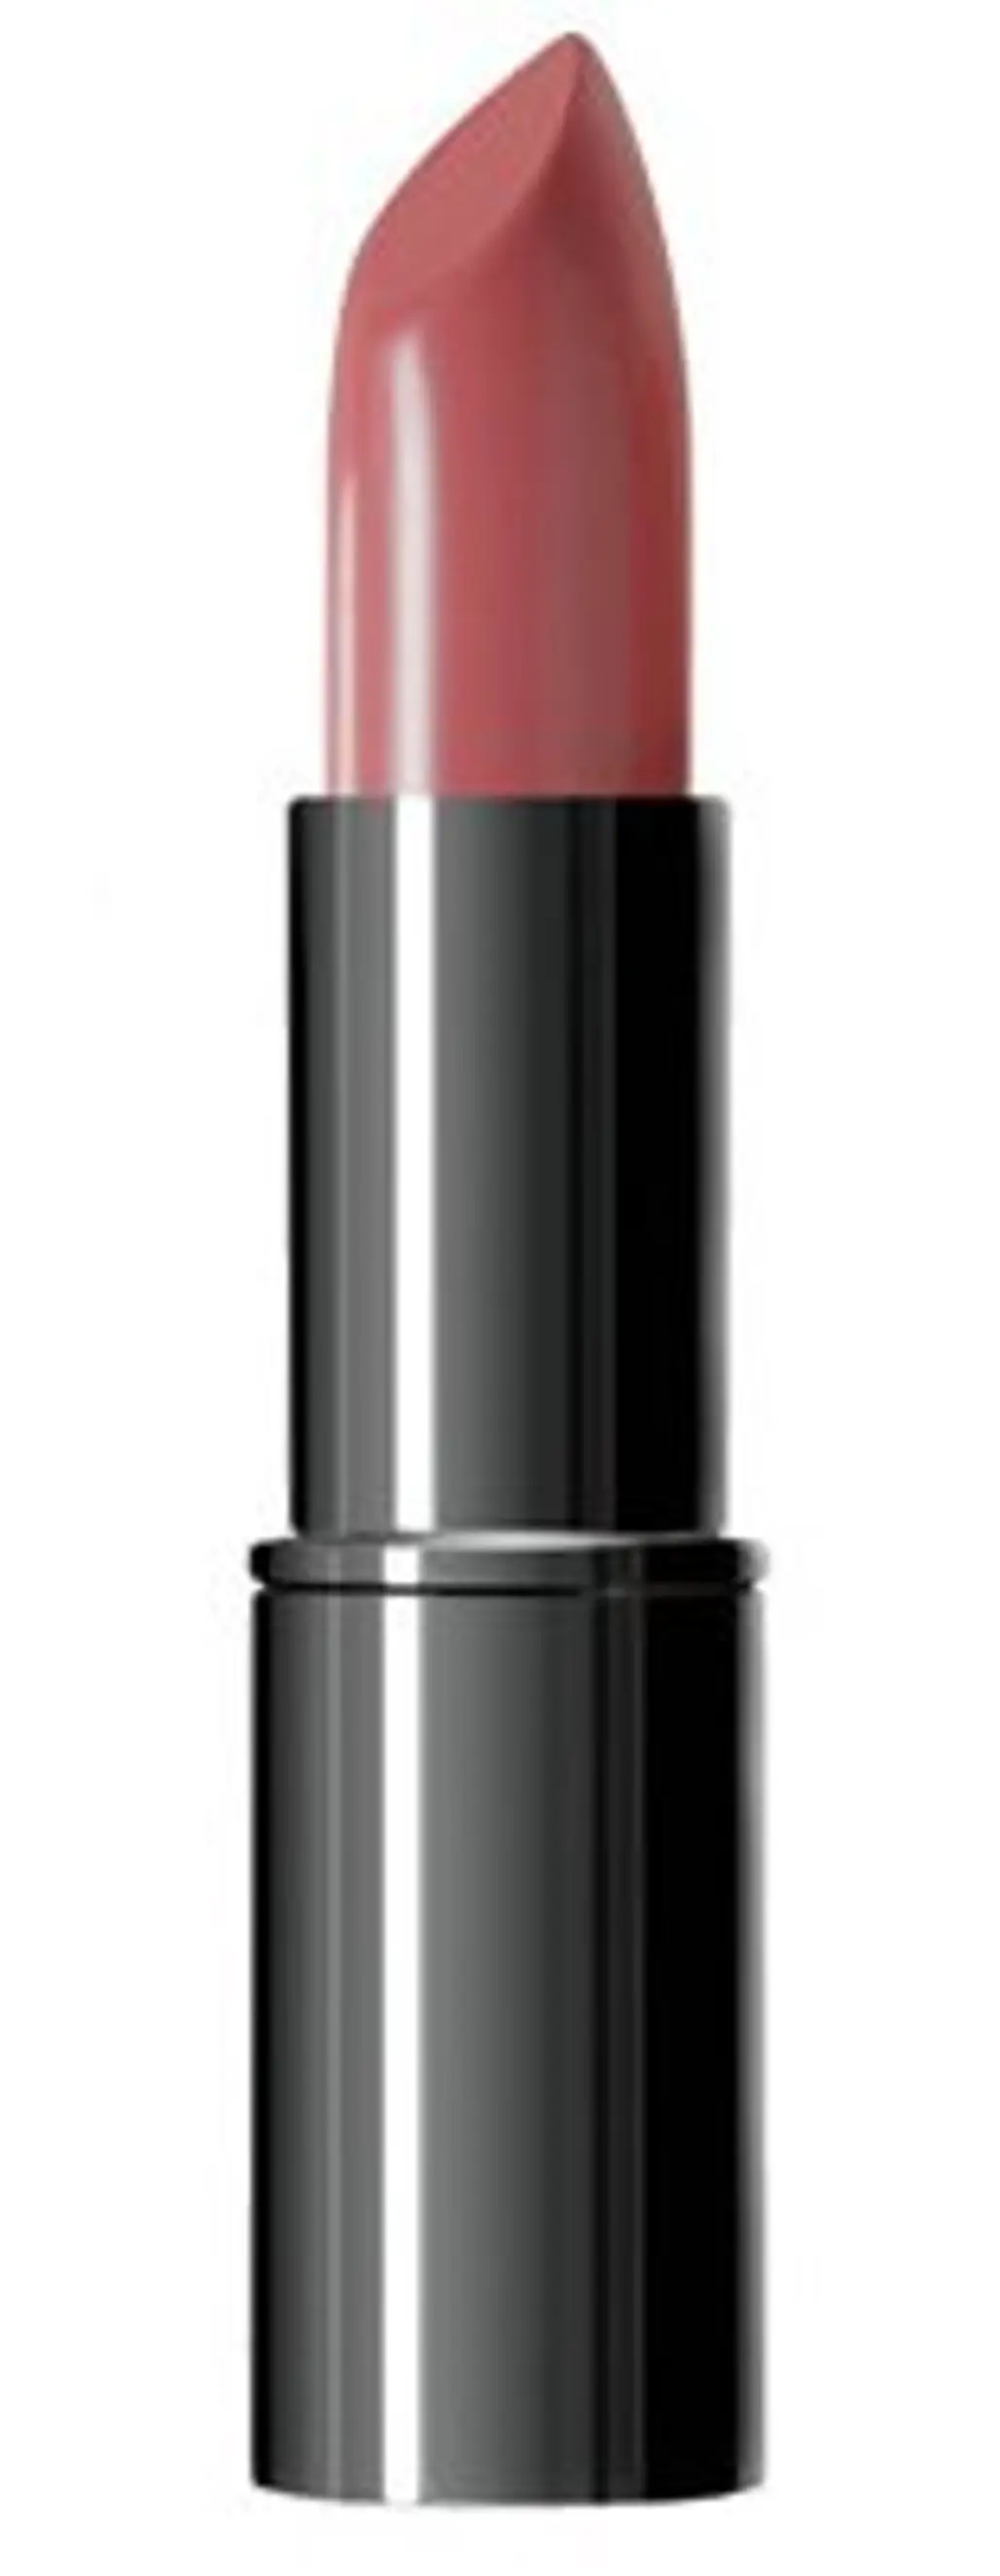 Smashbox Photo Finish Lipstick with Sila-Silk Technology